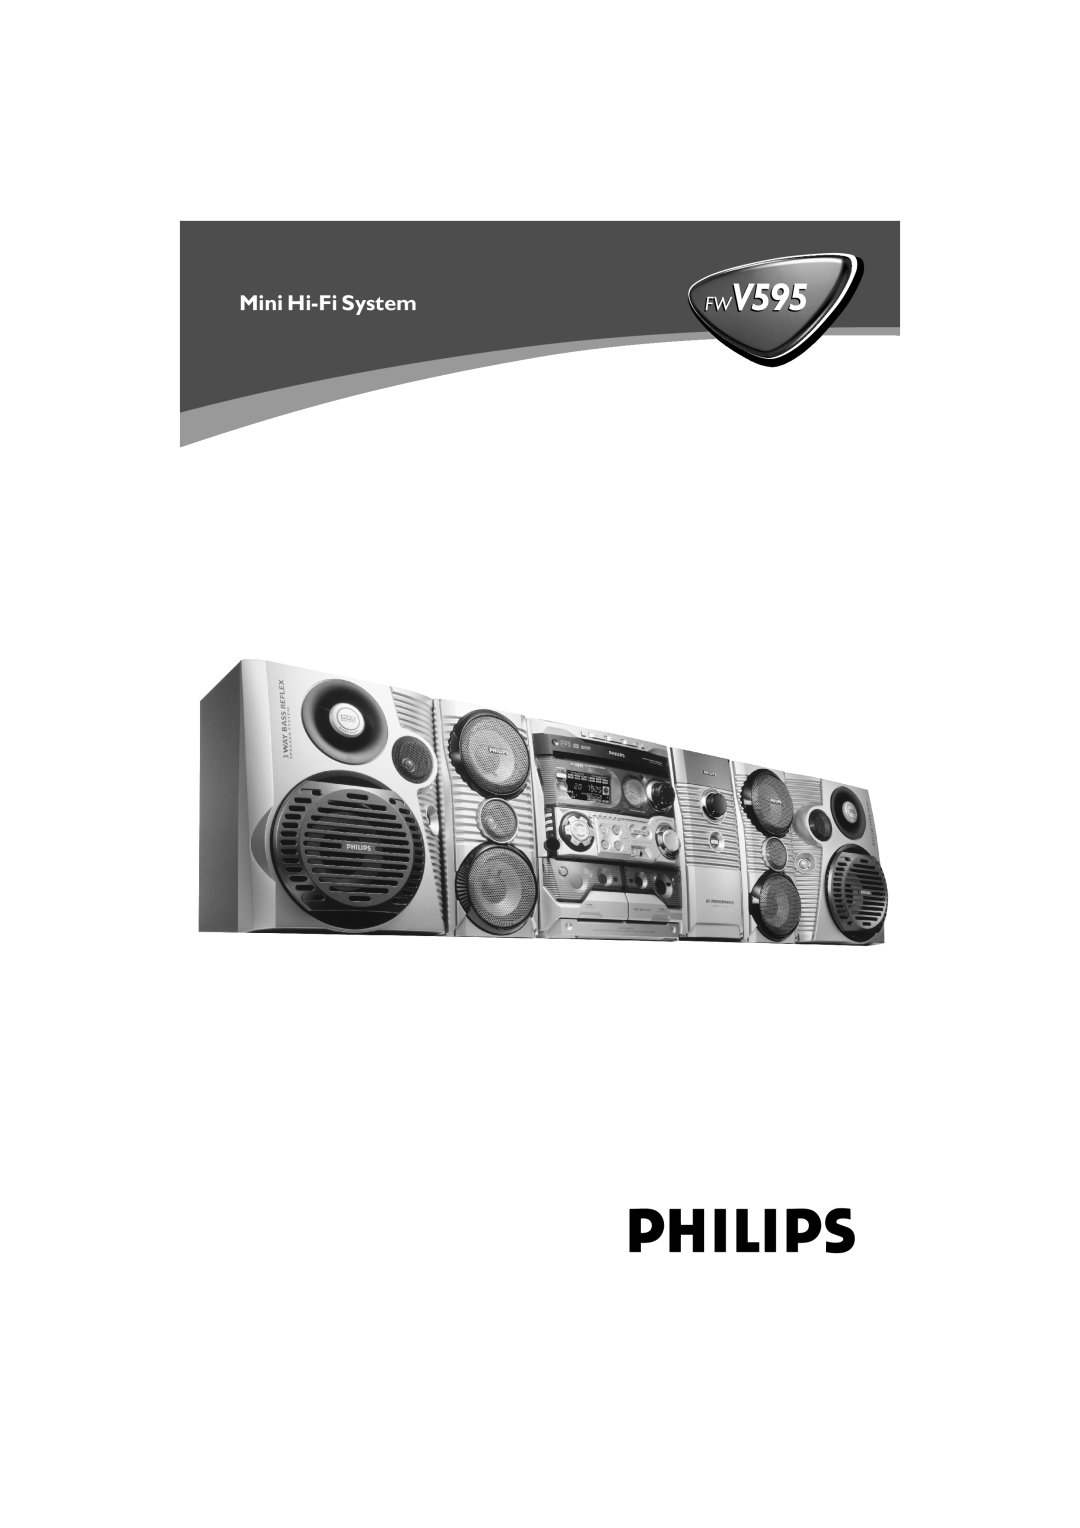 Philips FWV595 manual Mini Hi-FiSystem 